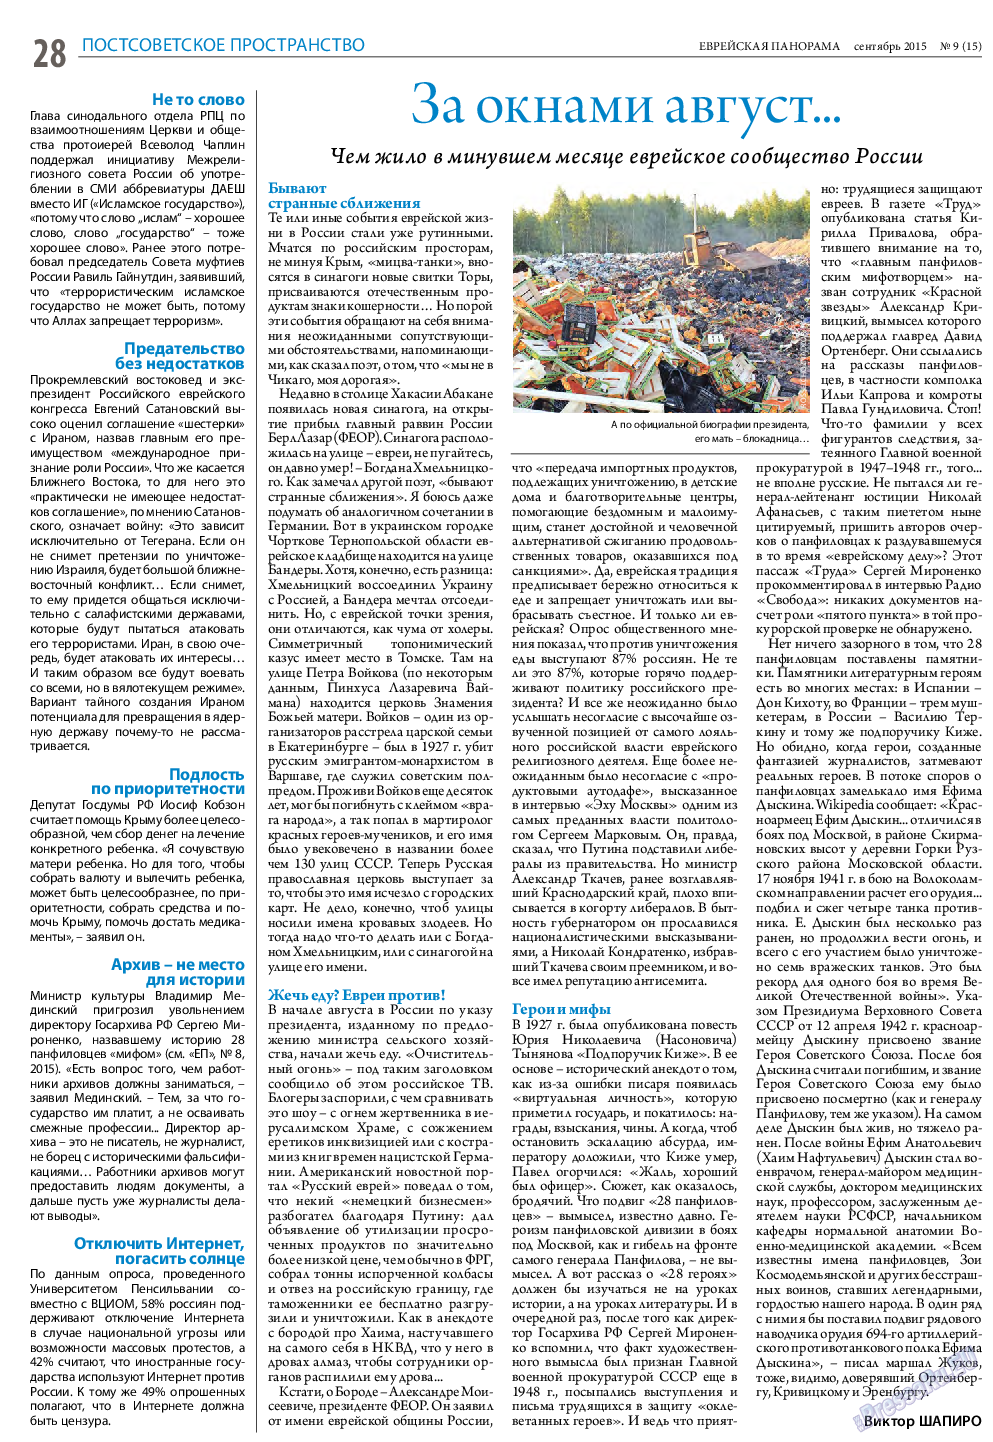 Еврейская панорама, газета. 2015 №9 стр.28